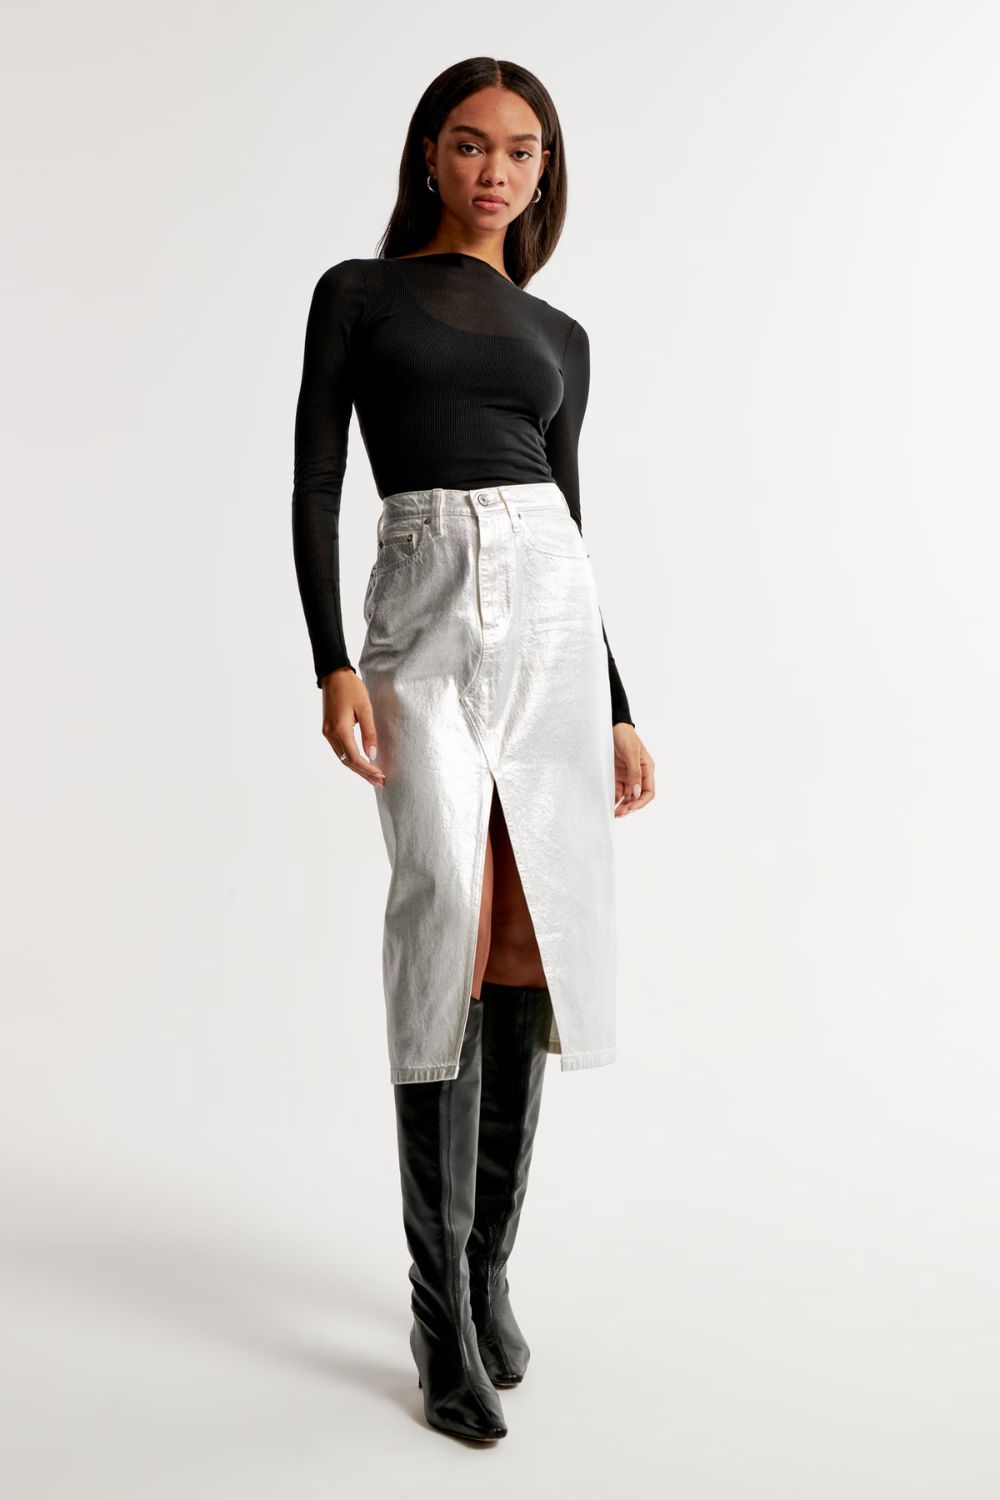 Silver Denim Midi Skirt + Black Long Sleeve Top + Short Heeled Boots